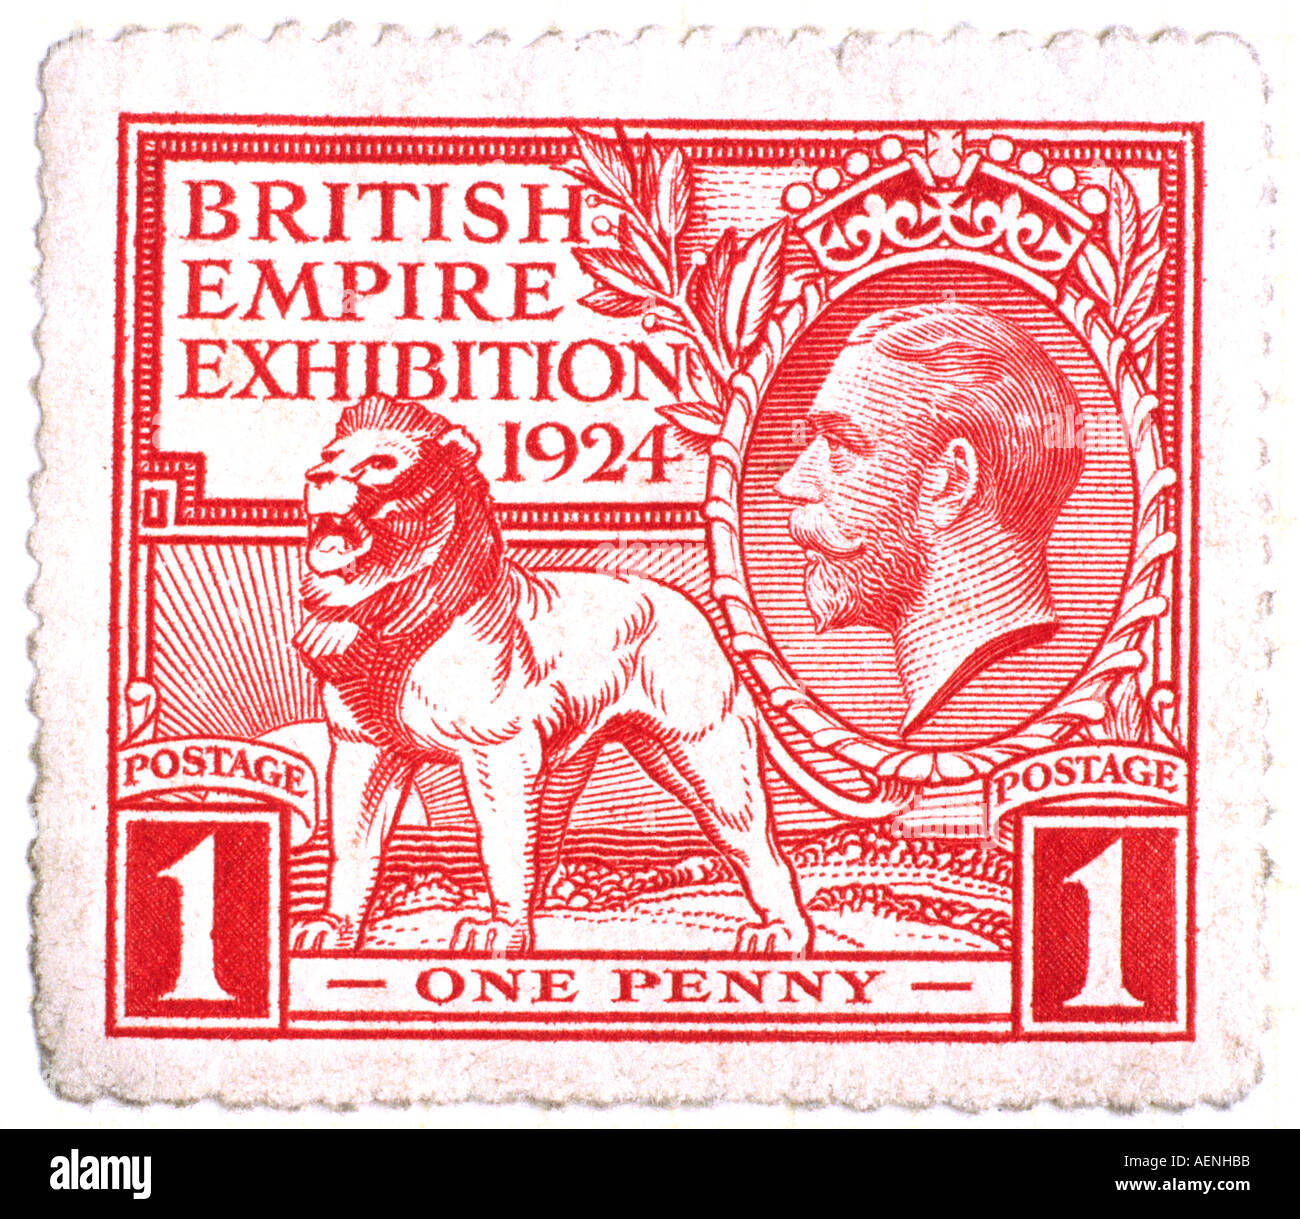 British Empire Exhibition stamp Stock Photo